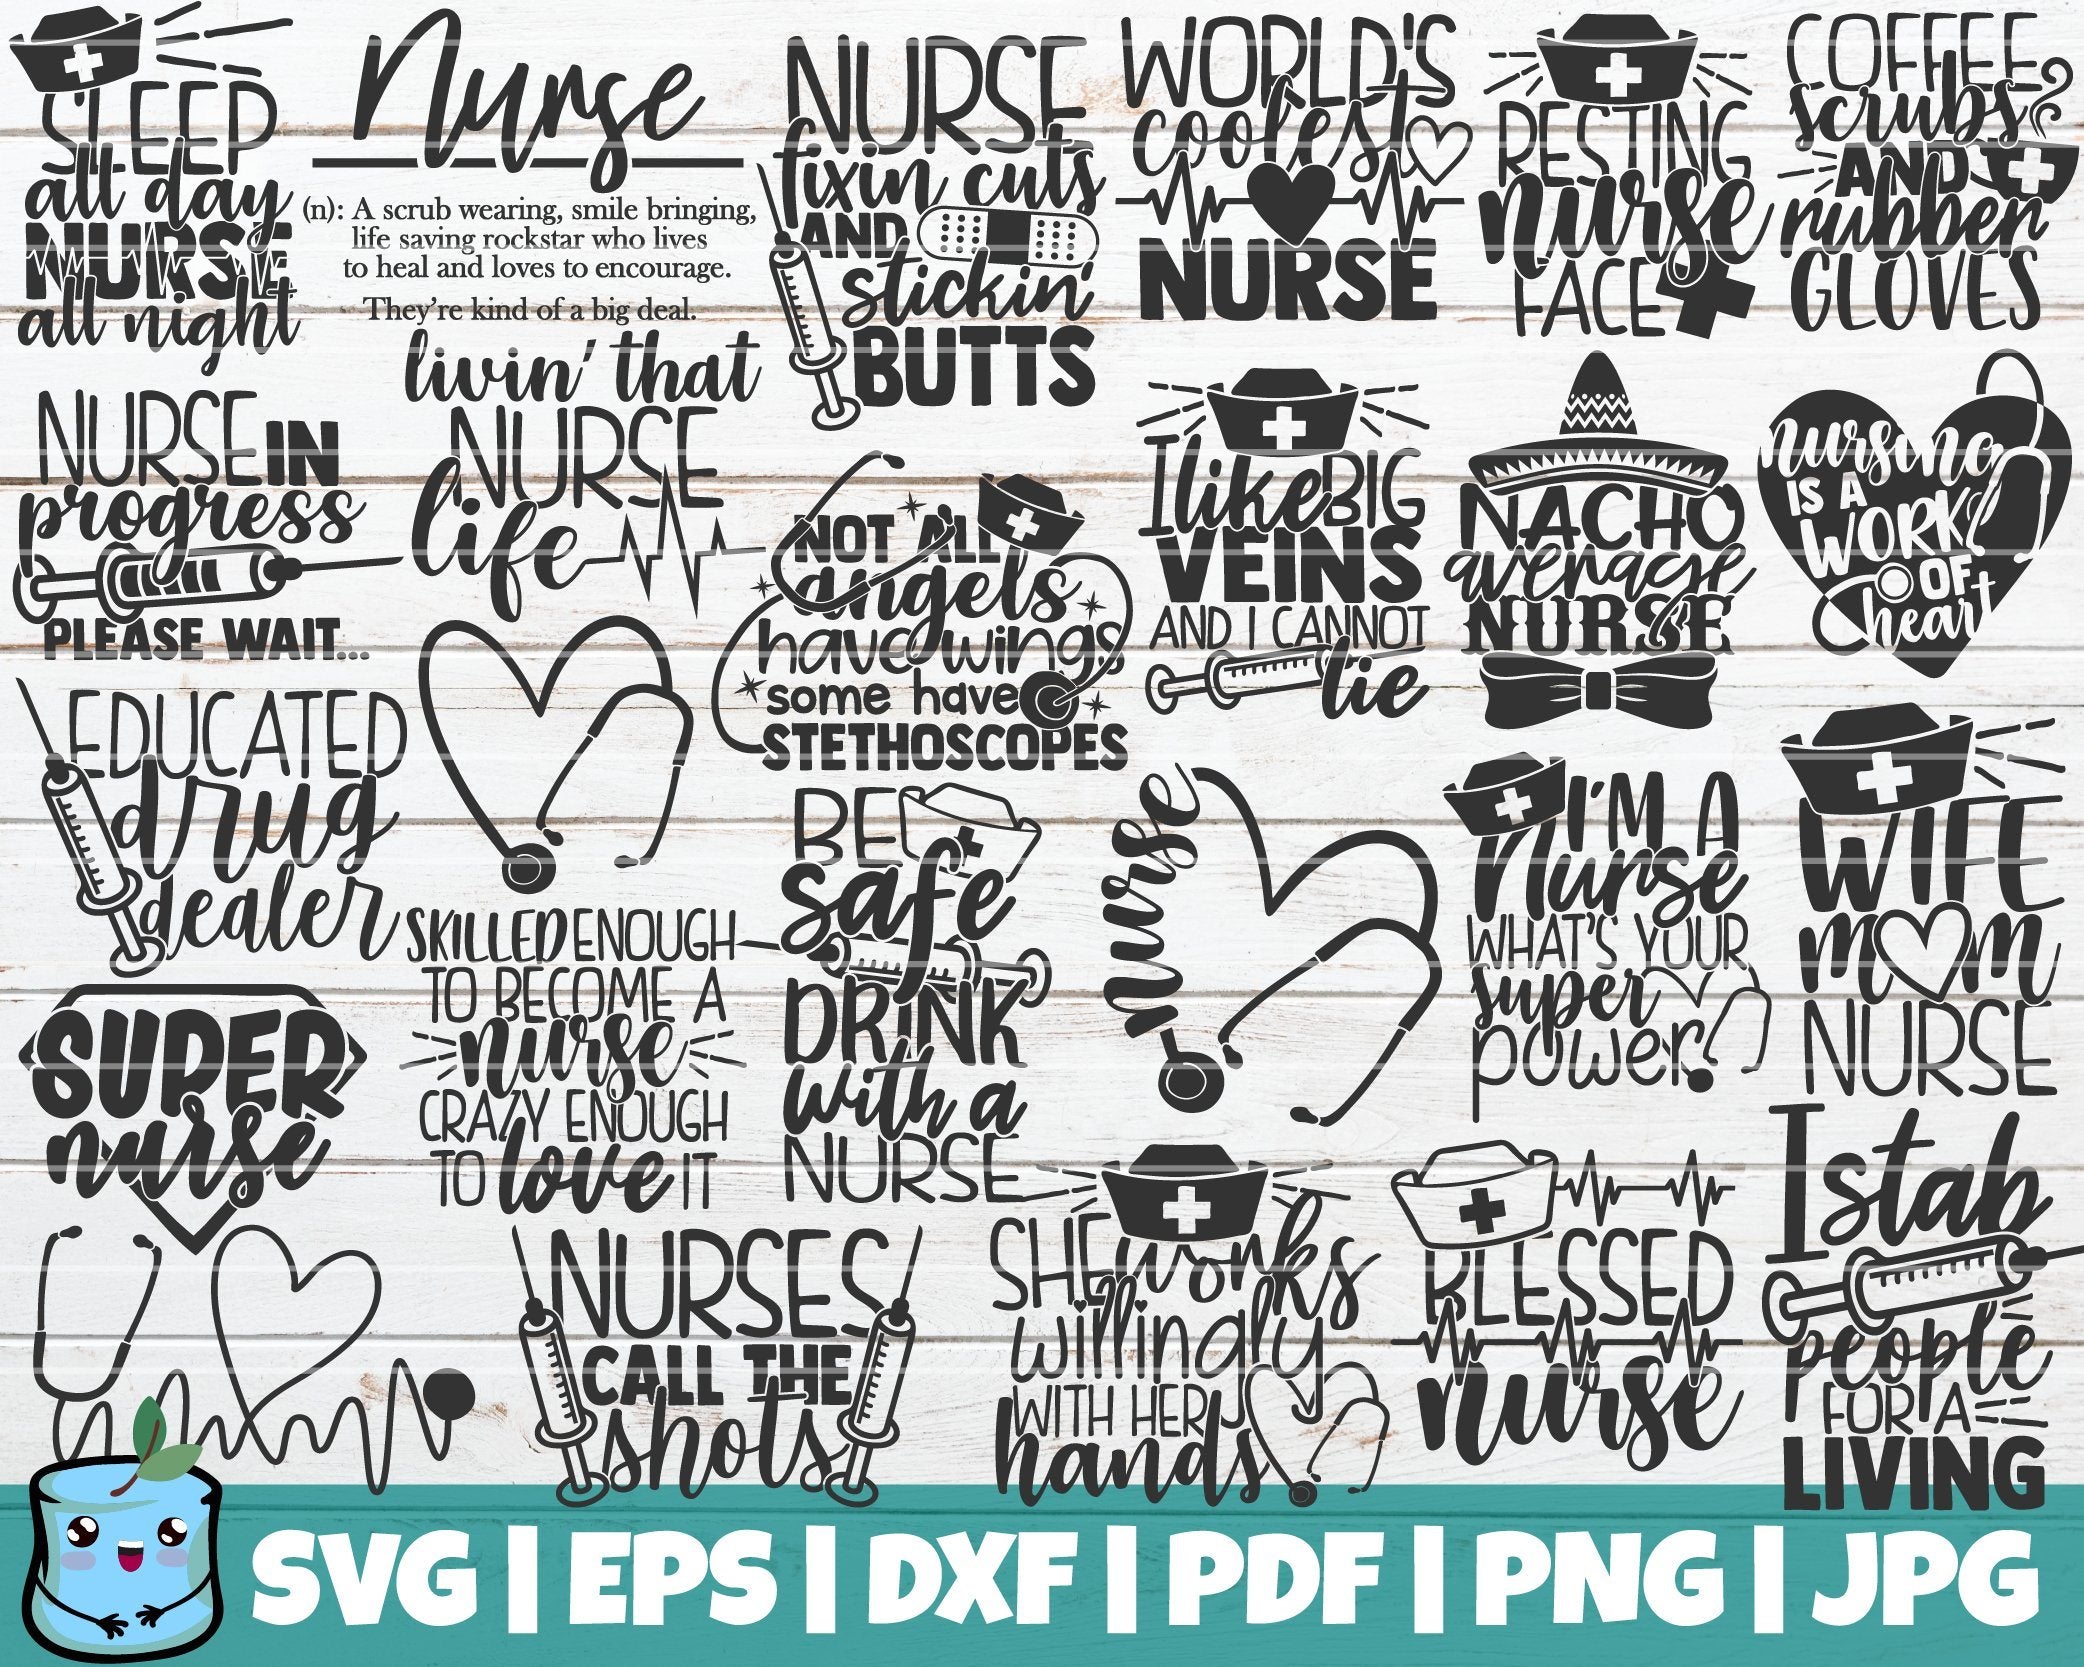 Lvn nurselife SVG - So Fontsy